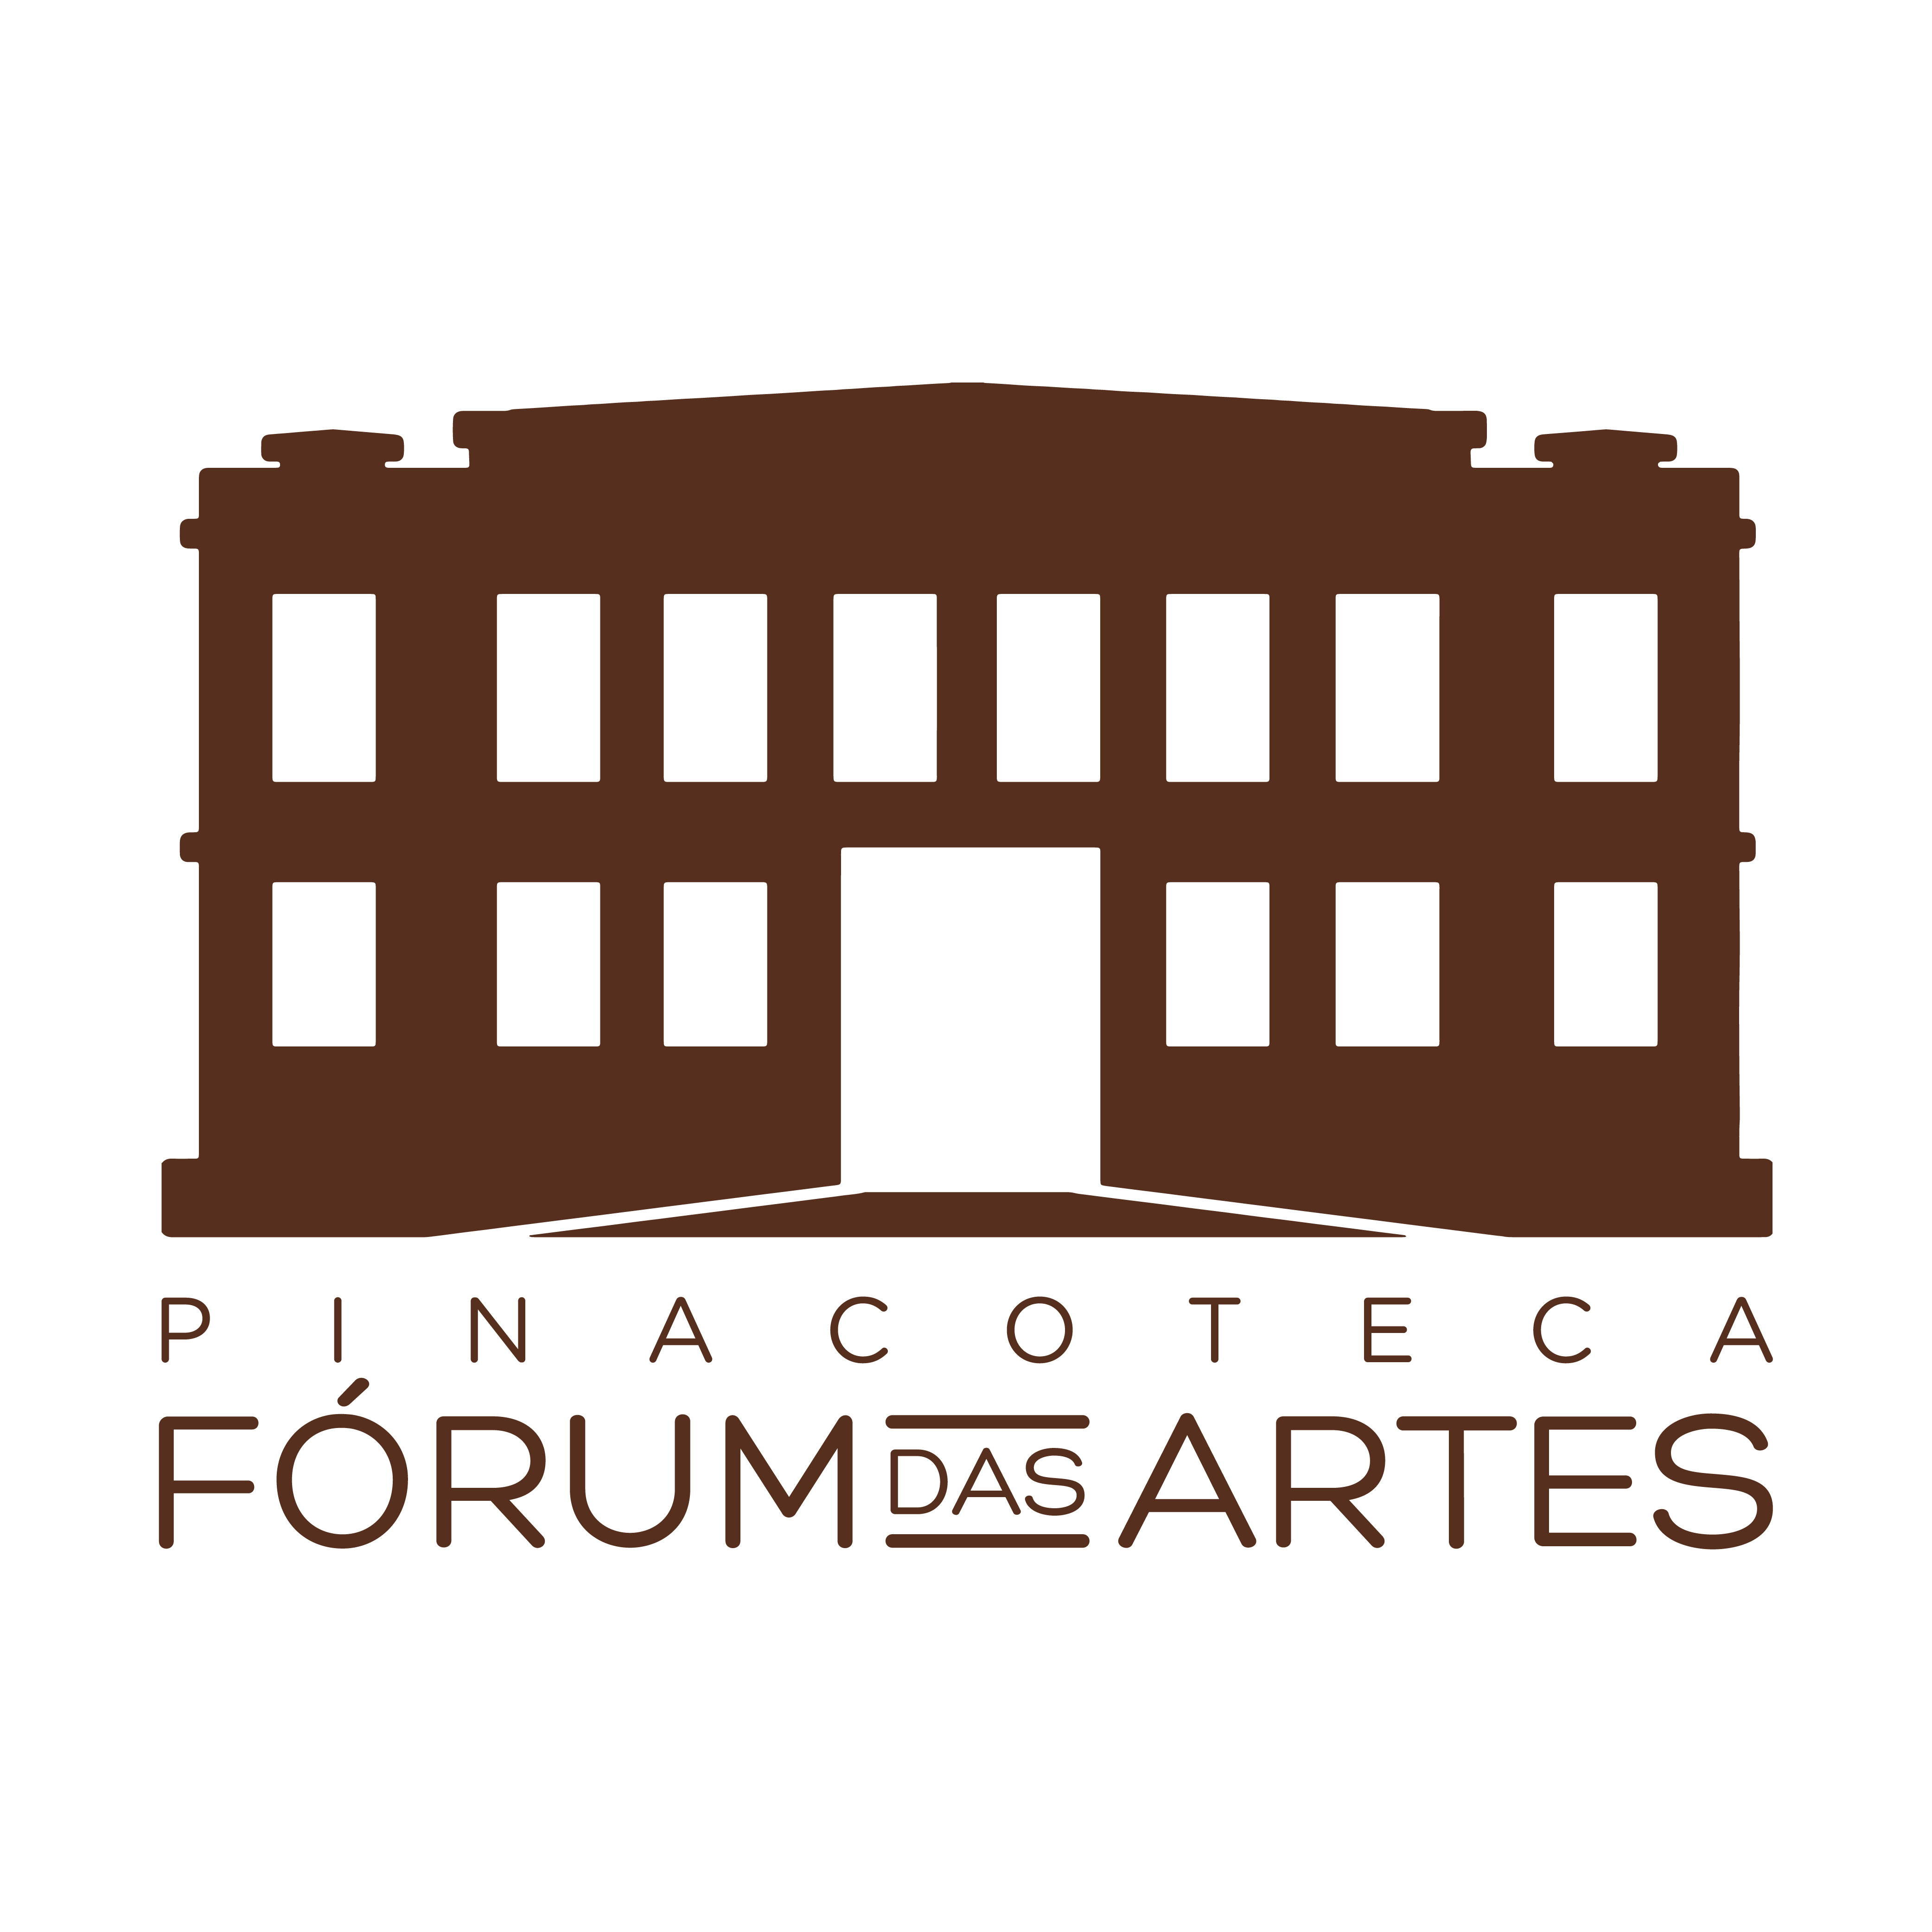 Pinacoteca_ForumDasArtes_logo-marrom